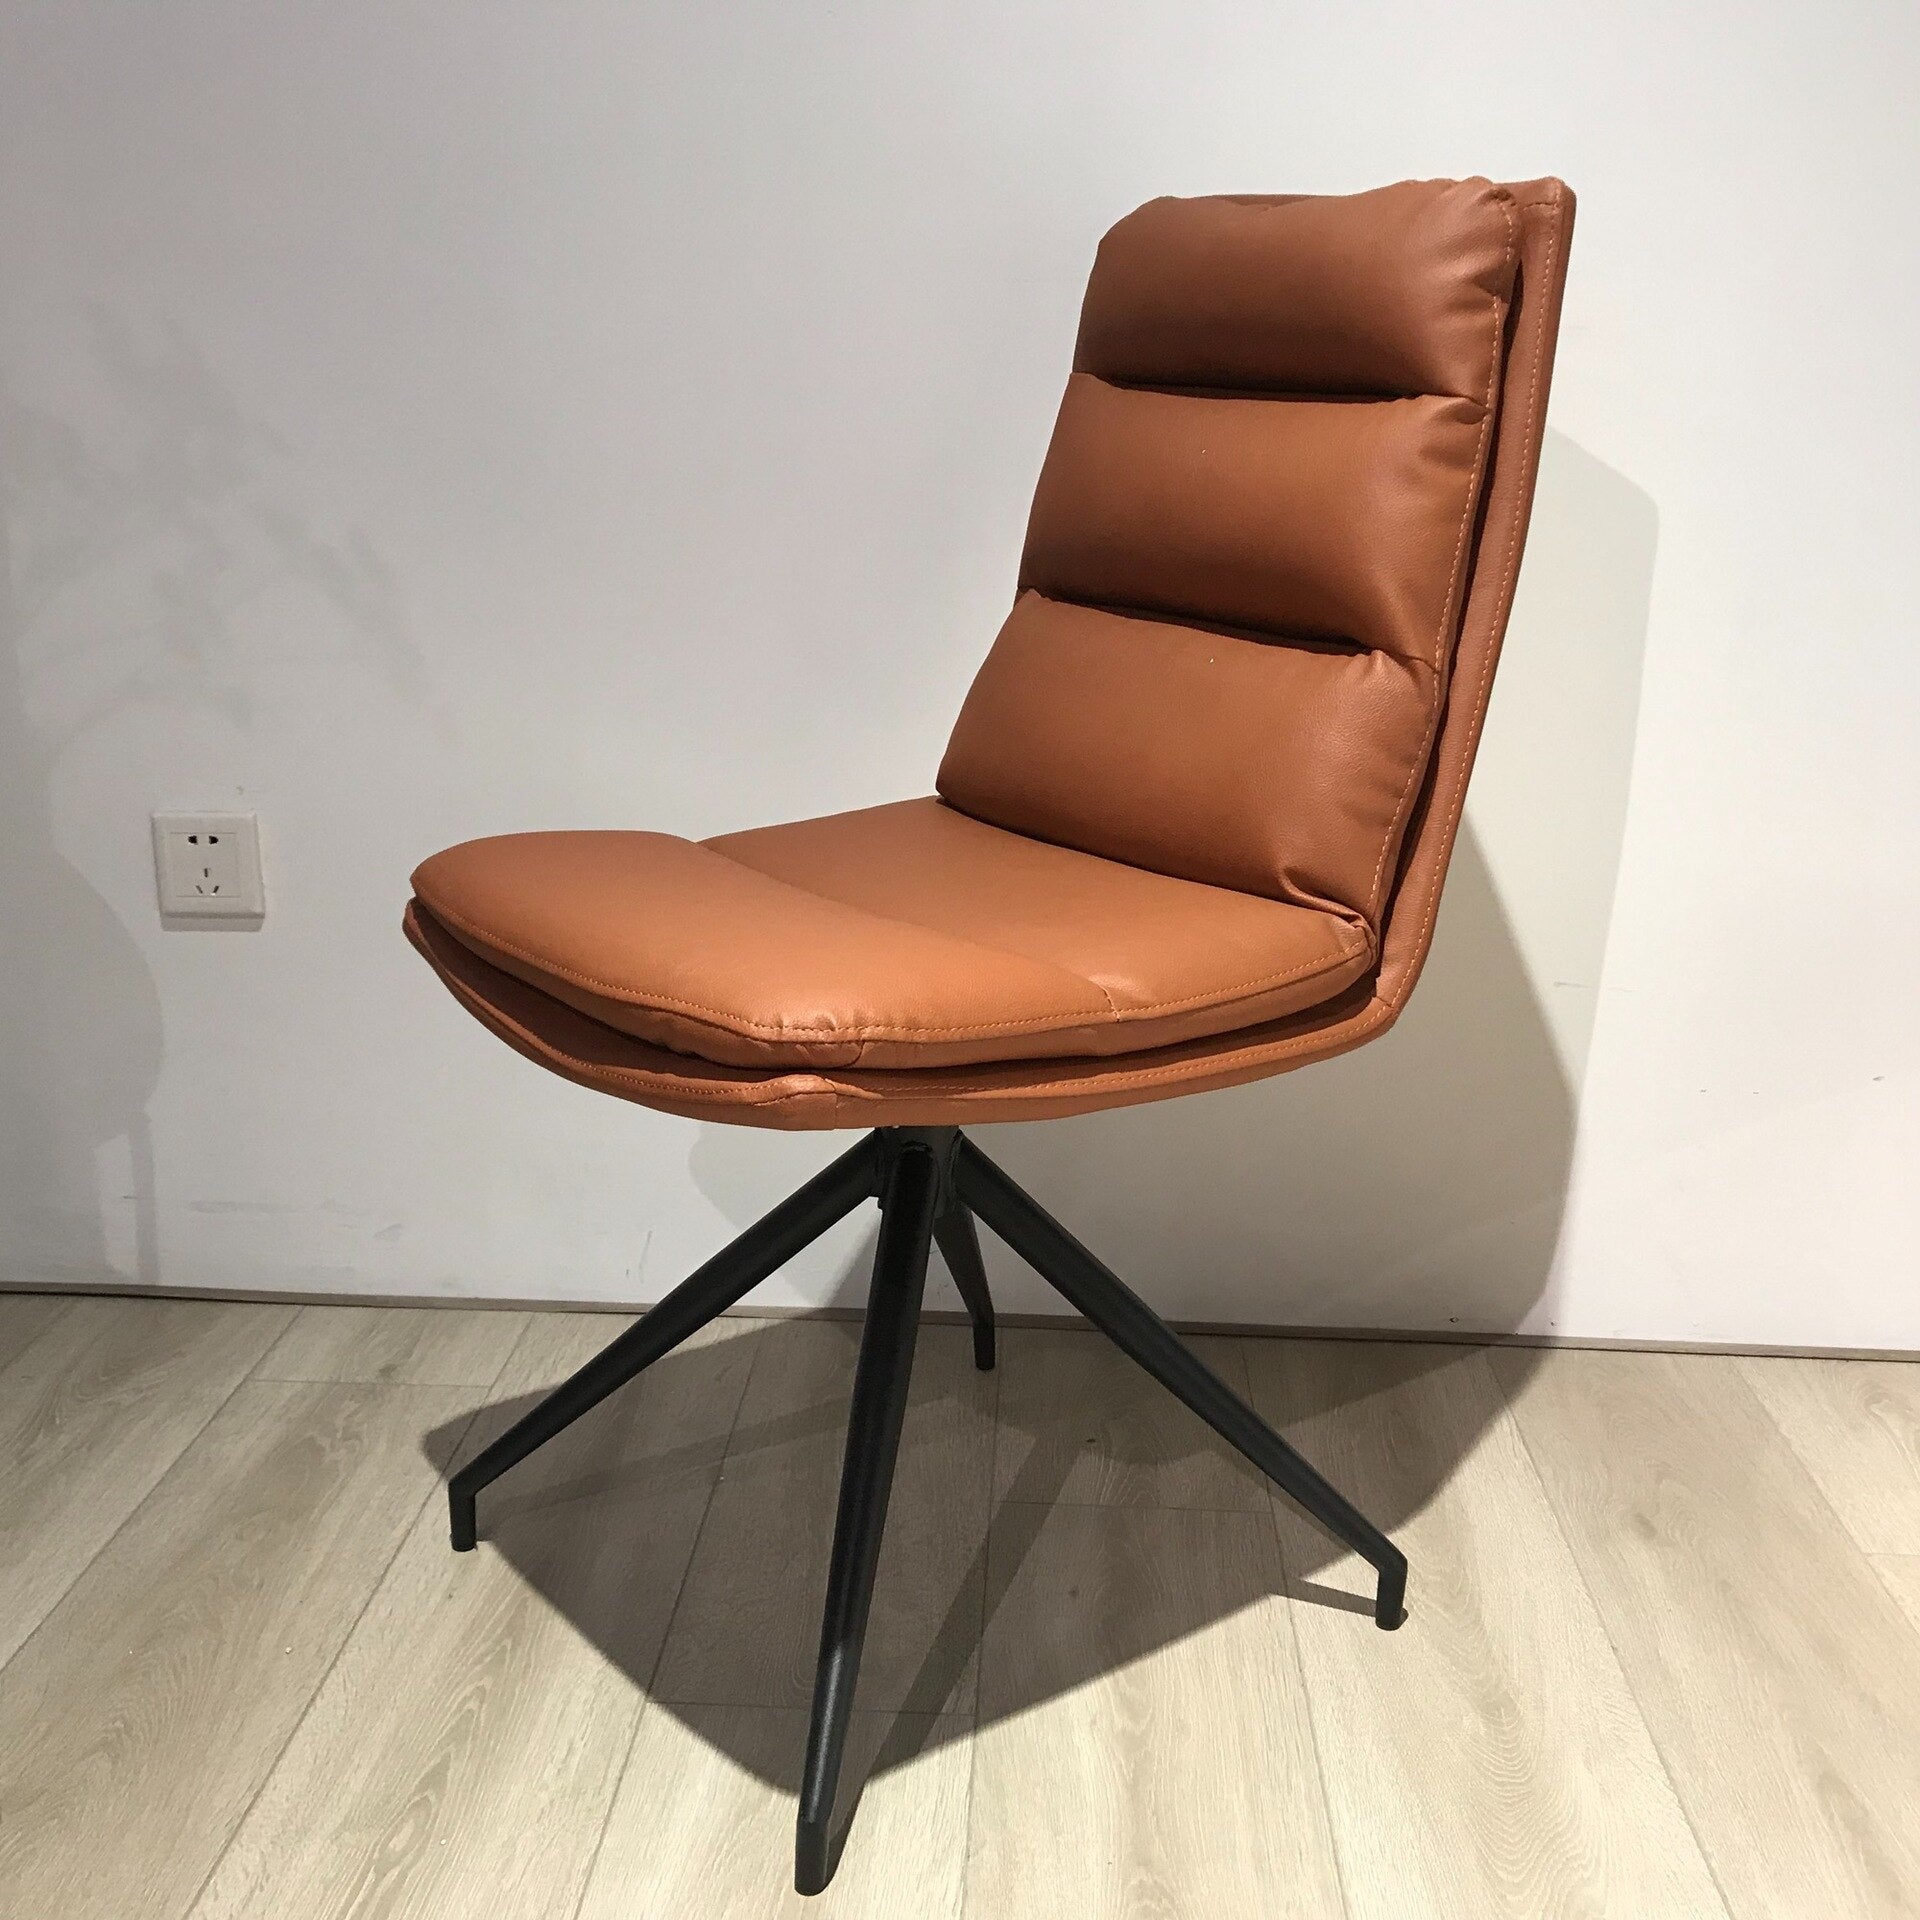 Dining Chair Modern Minimalist 360-degree Rotating Chair